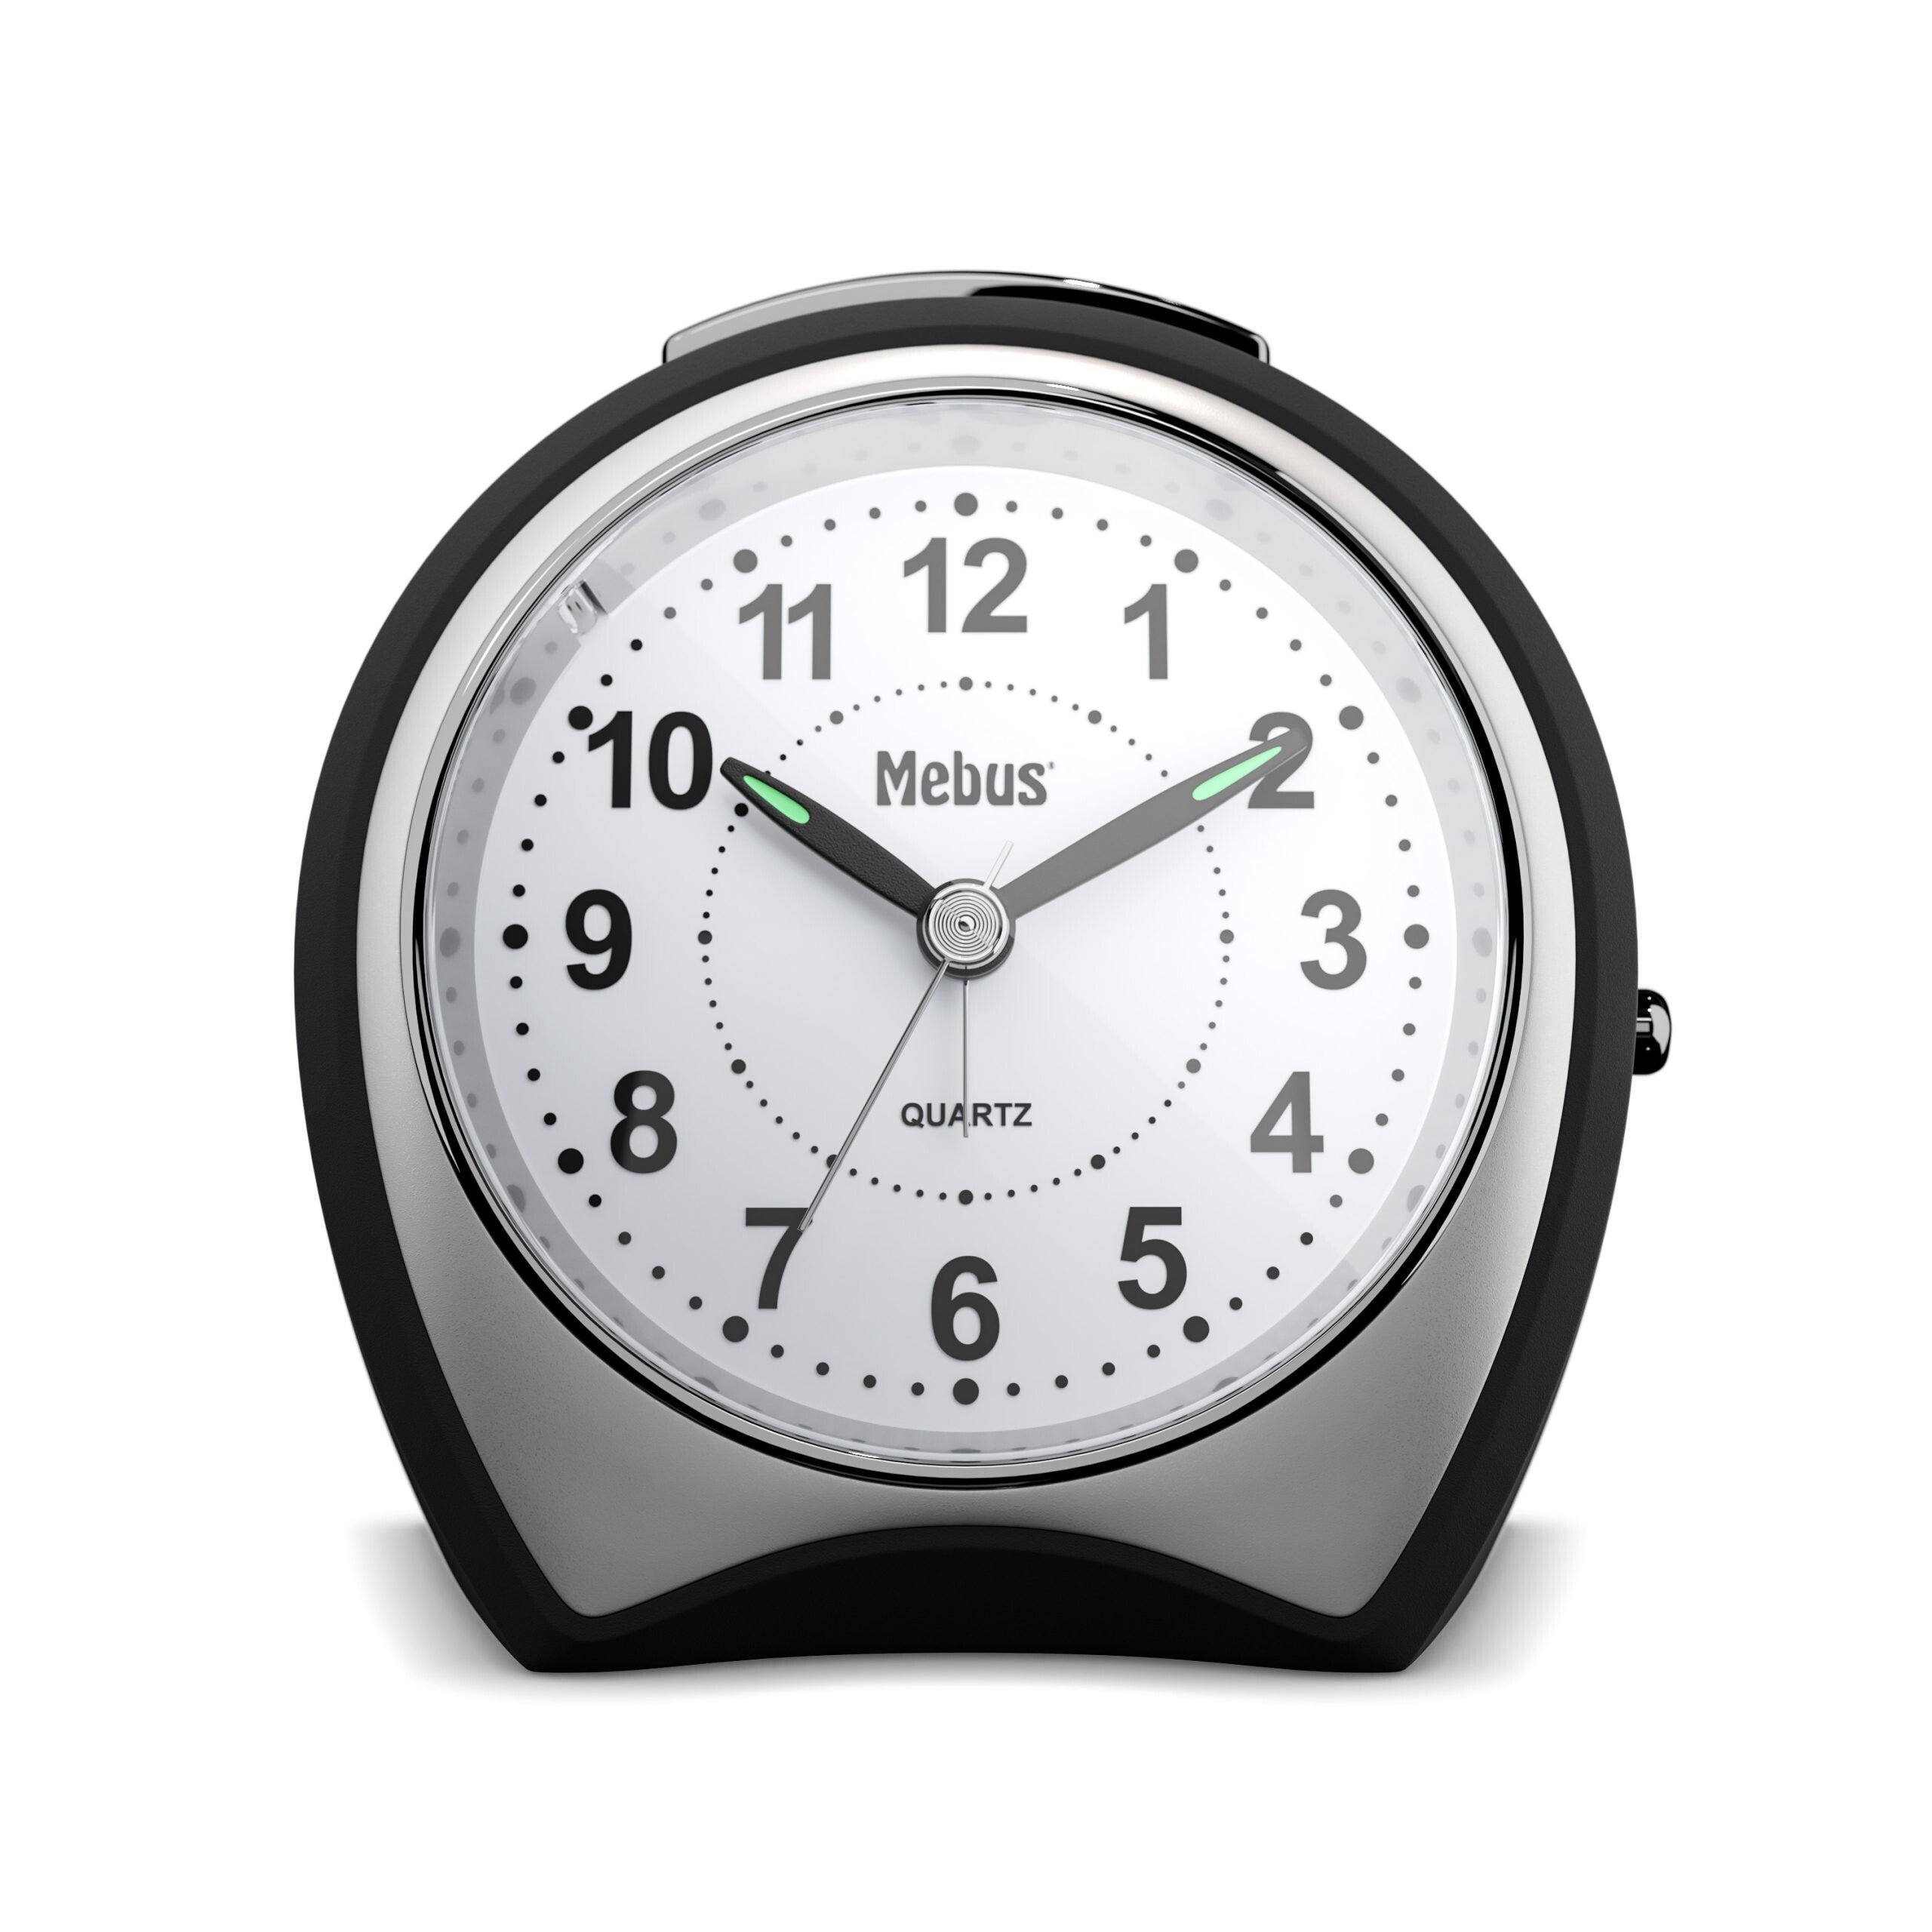 27220 - Quartz alarm clock - Black - Grey - Plastic - 12h - Analog - Battery